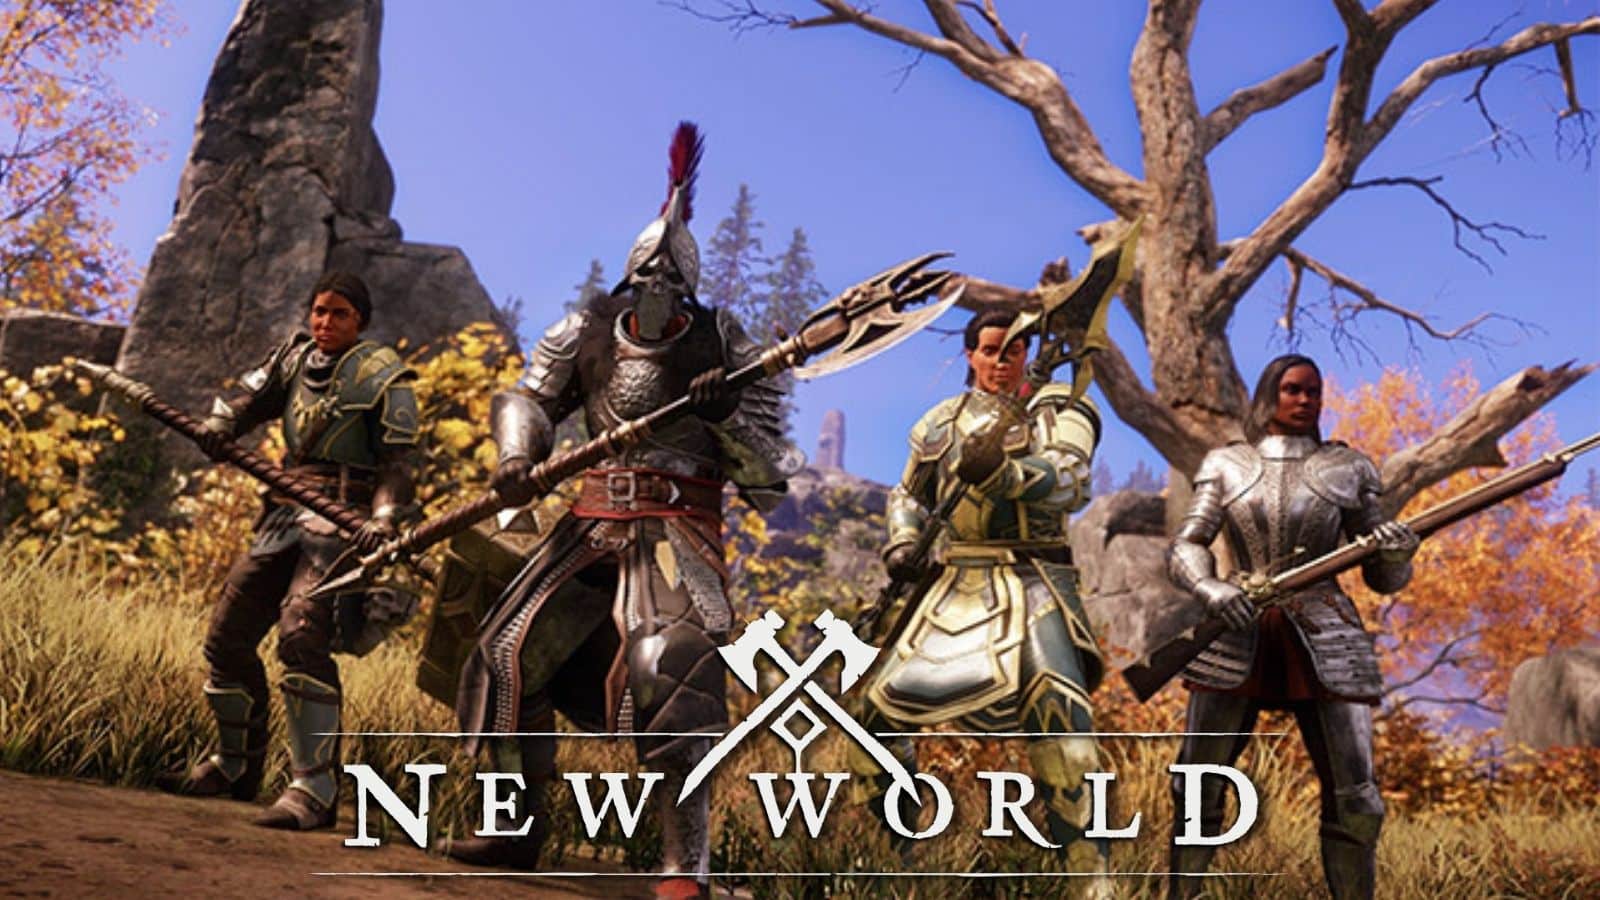 Greatsword Showcase - News  New World - Open World MMO PC Game